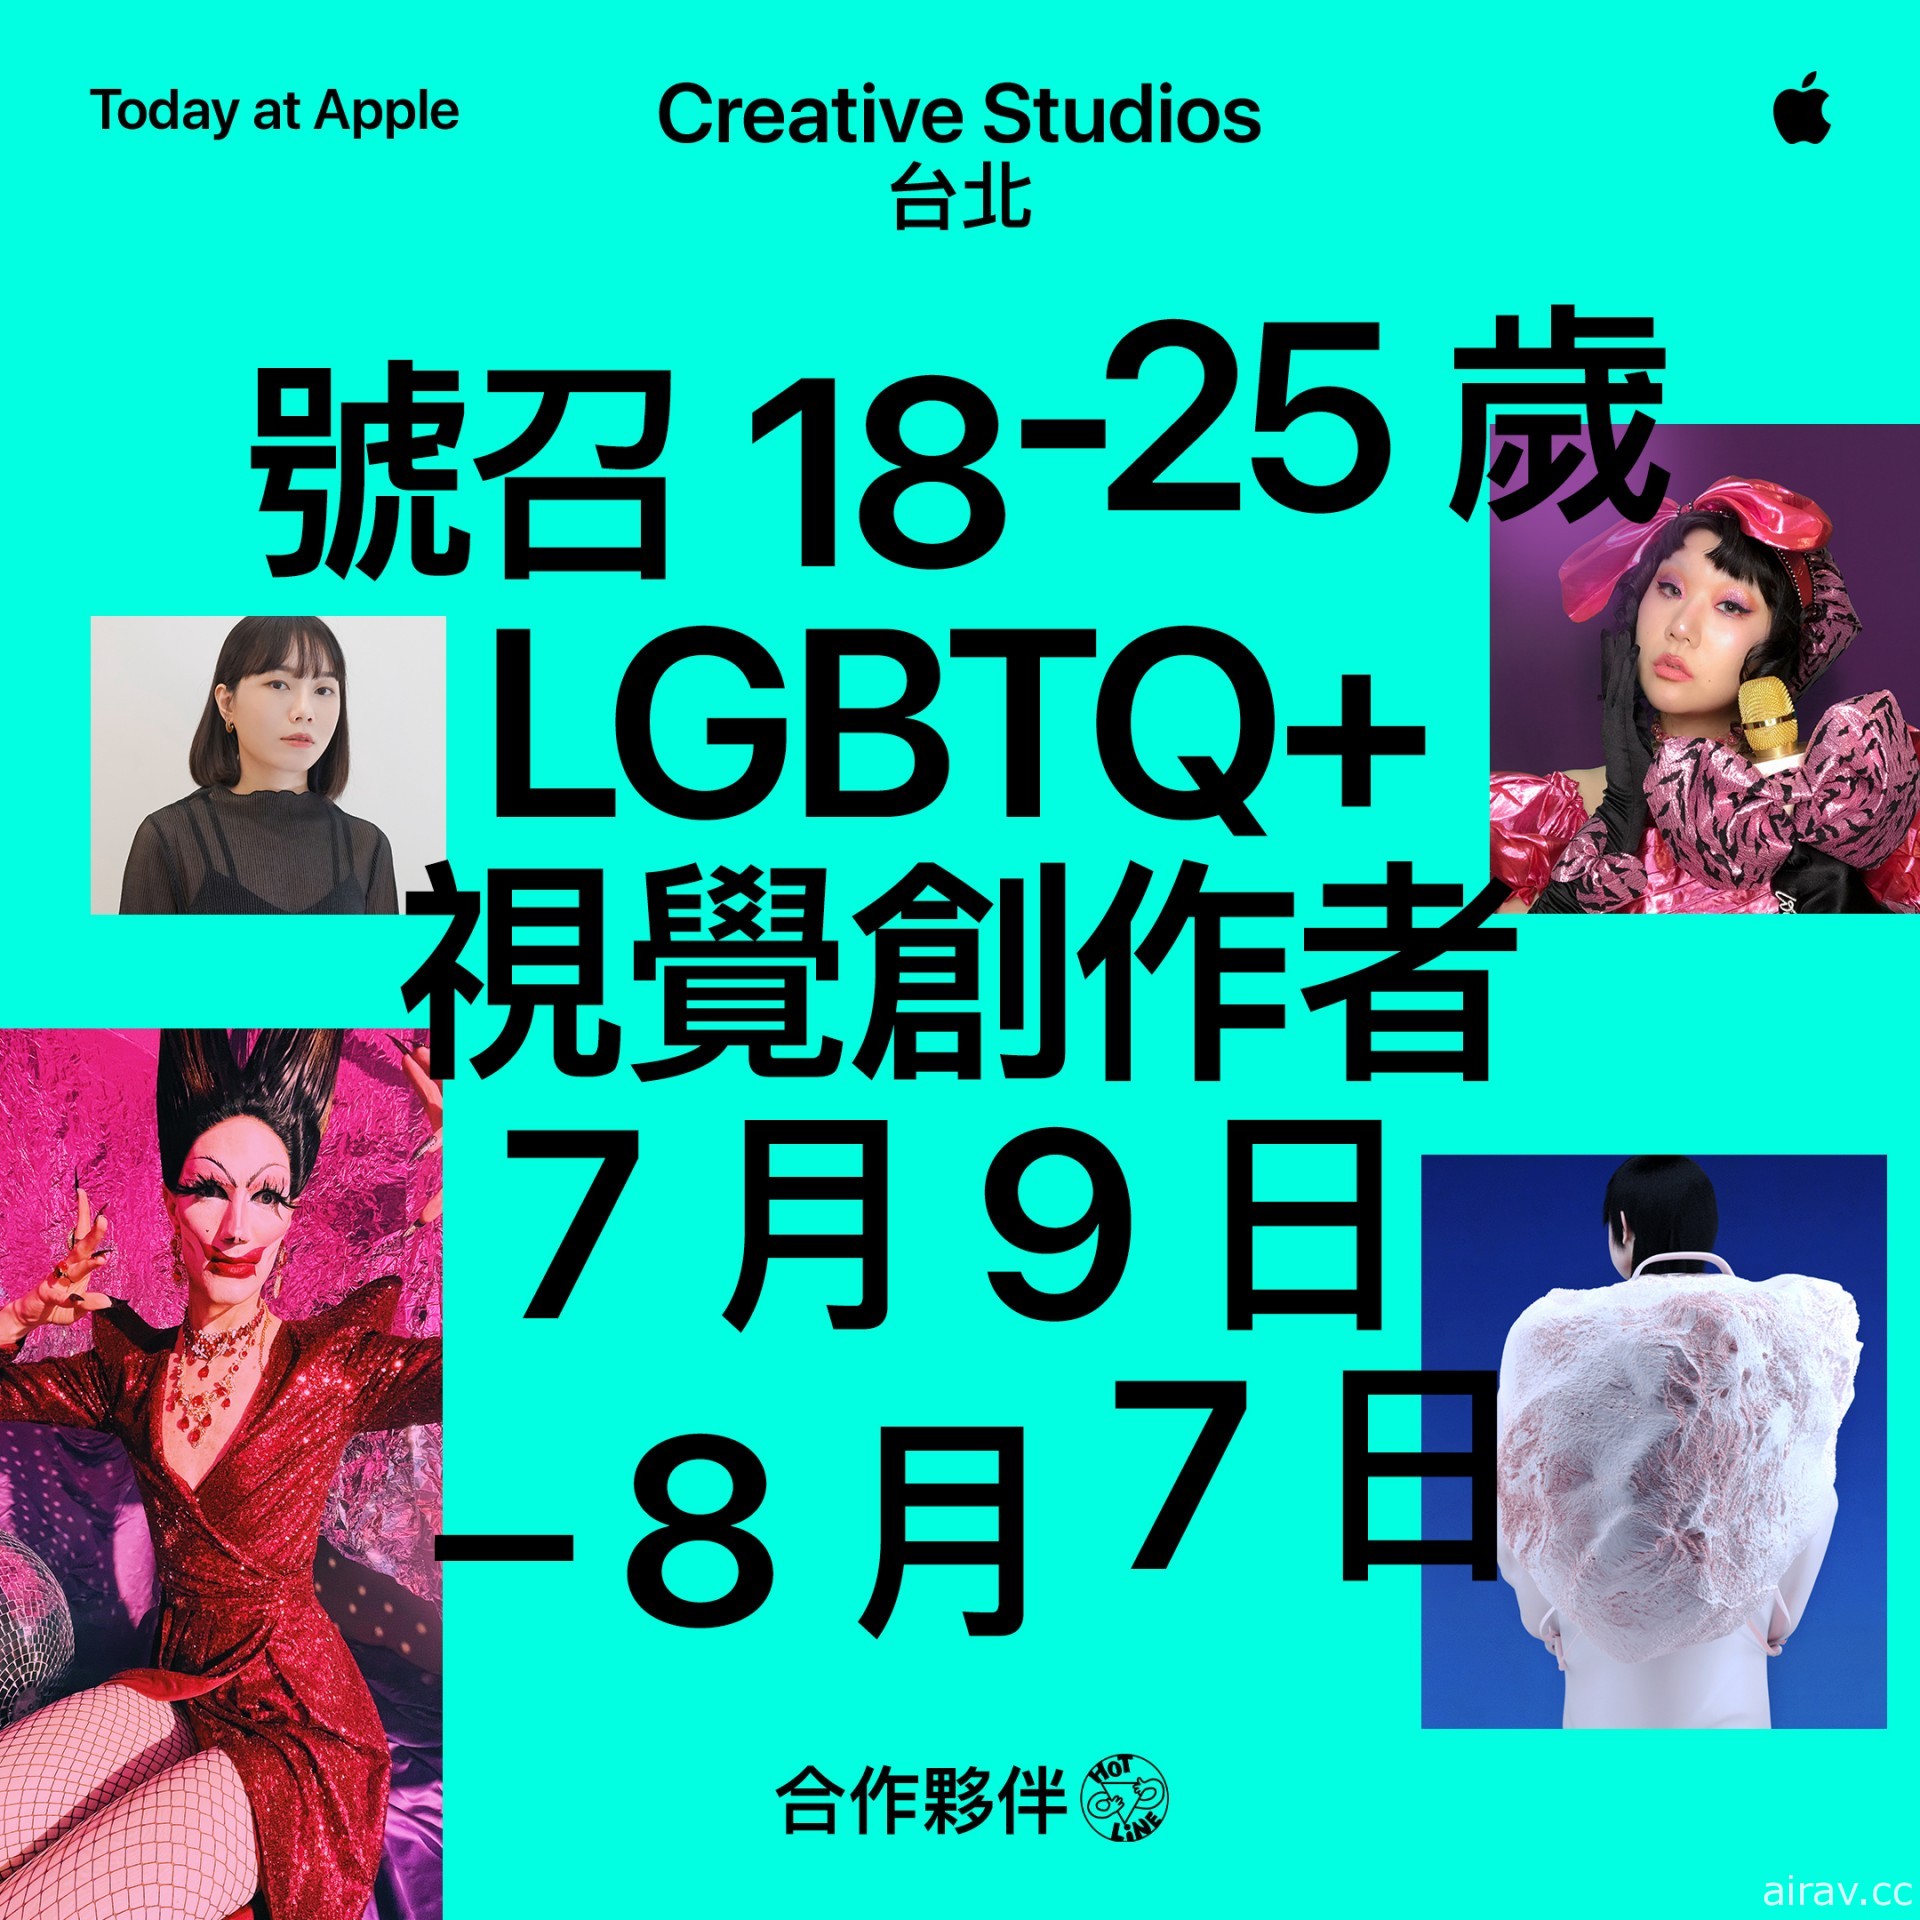 Apple 扩大举办 Today at Apple Creative Studios 为青年创意工作者提供机会